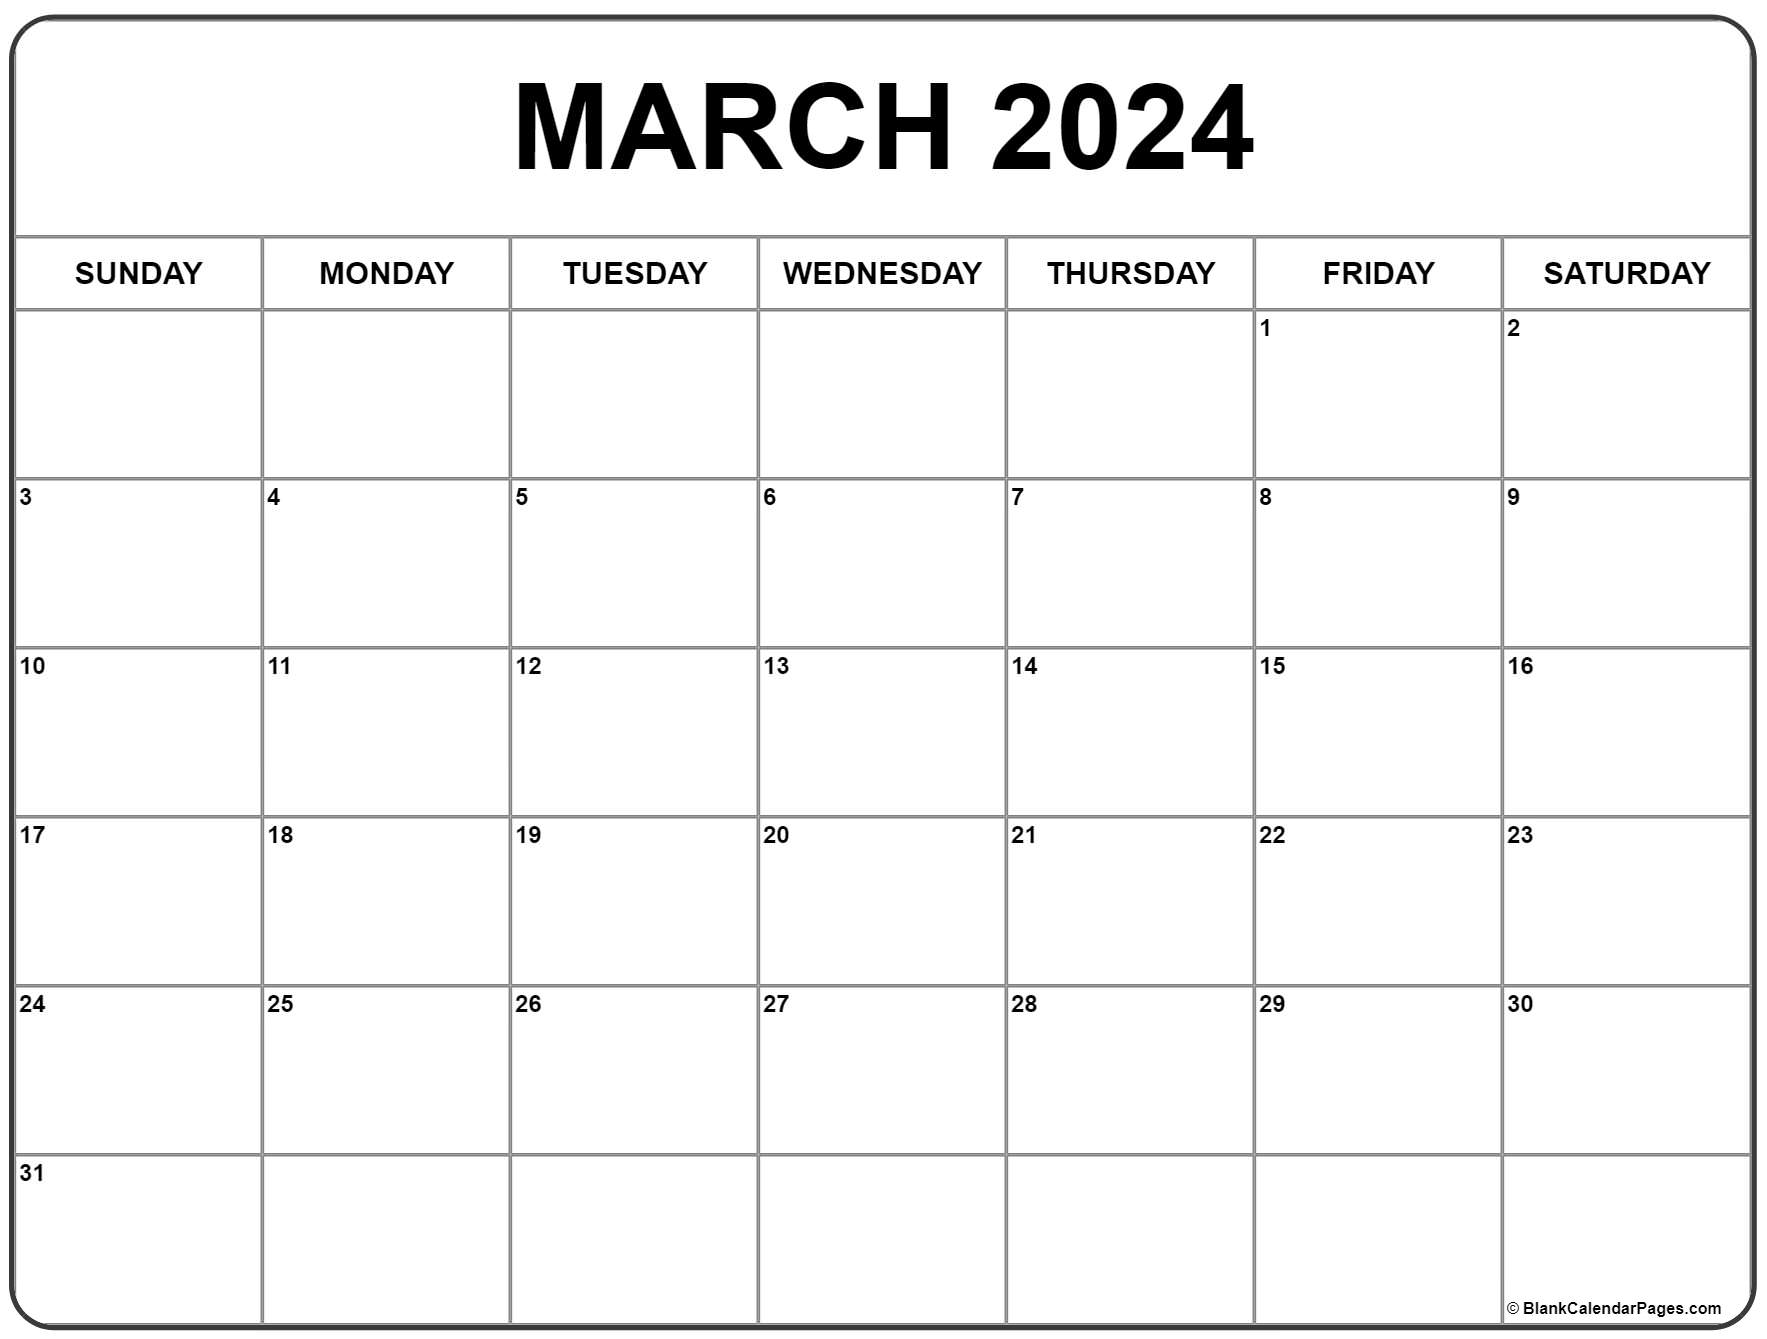 March 2024 Calendar | Free Printable Calendar for Blank March Calendar 2024 Printable